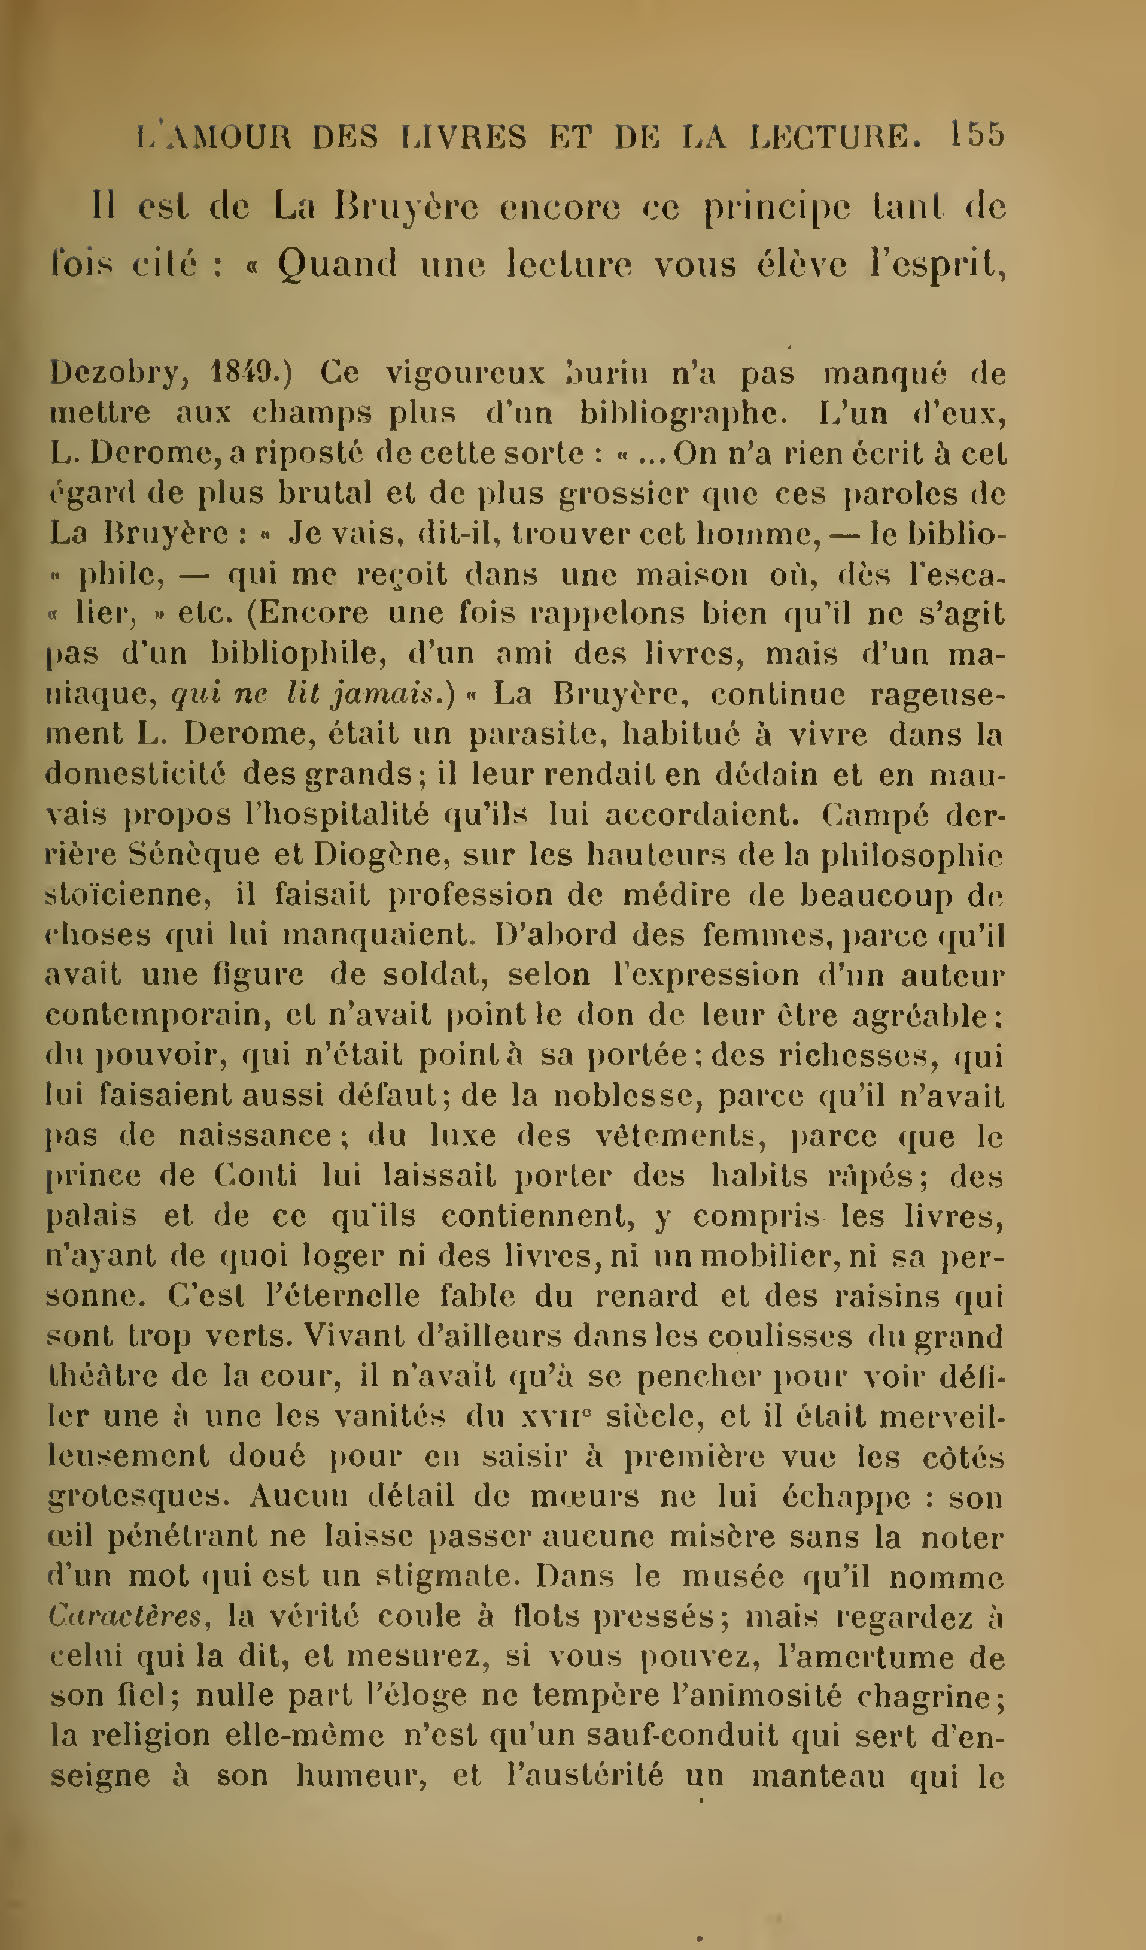 Albert Cim, Le Livre, t. I, p. 155.